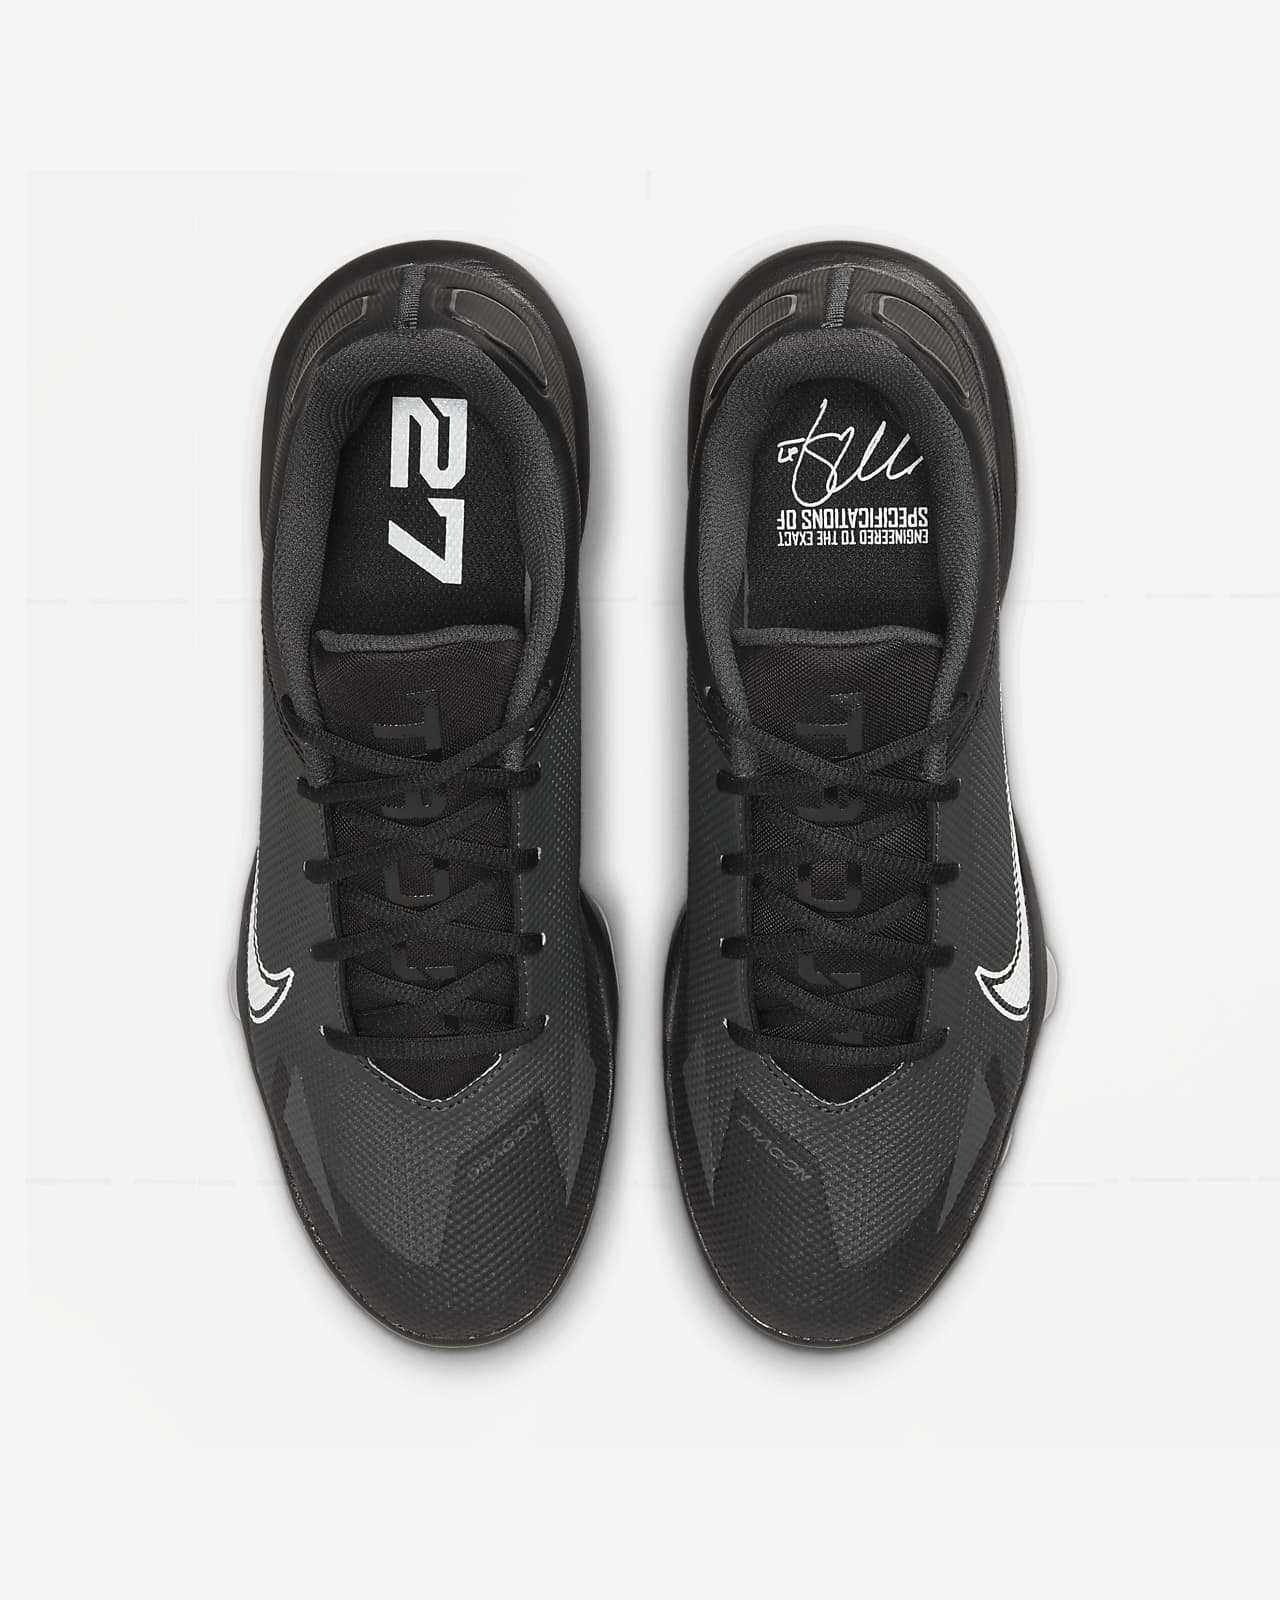 Nike Force Zoom Trout 8 Pro Men's Size 10 Metal Baseball Cleats